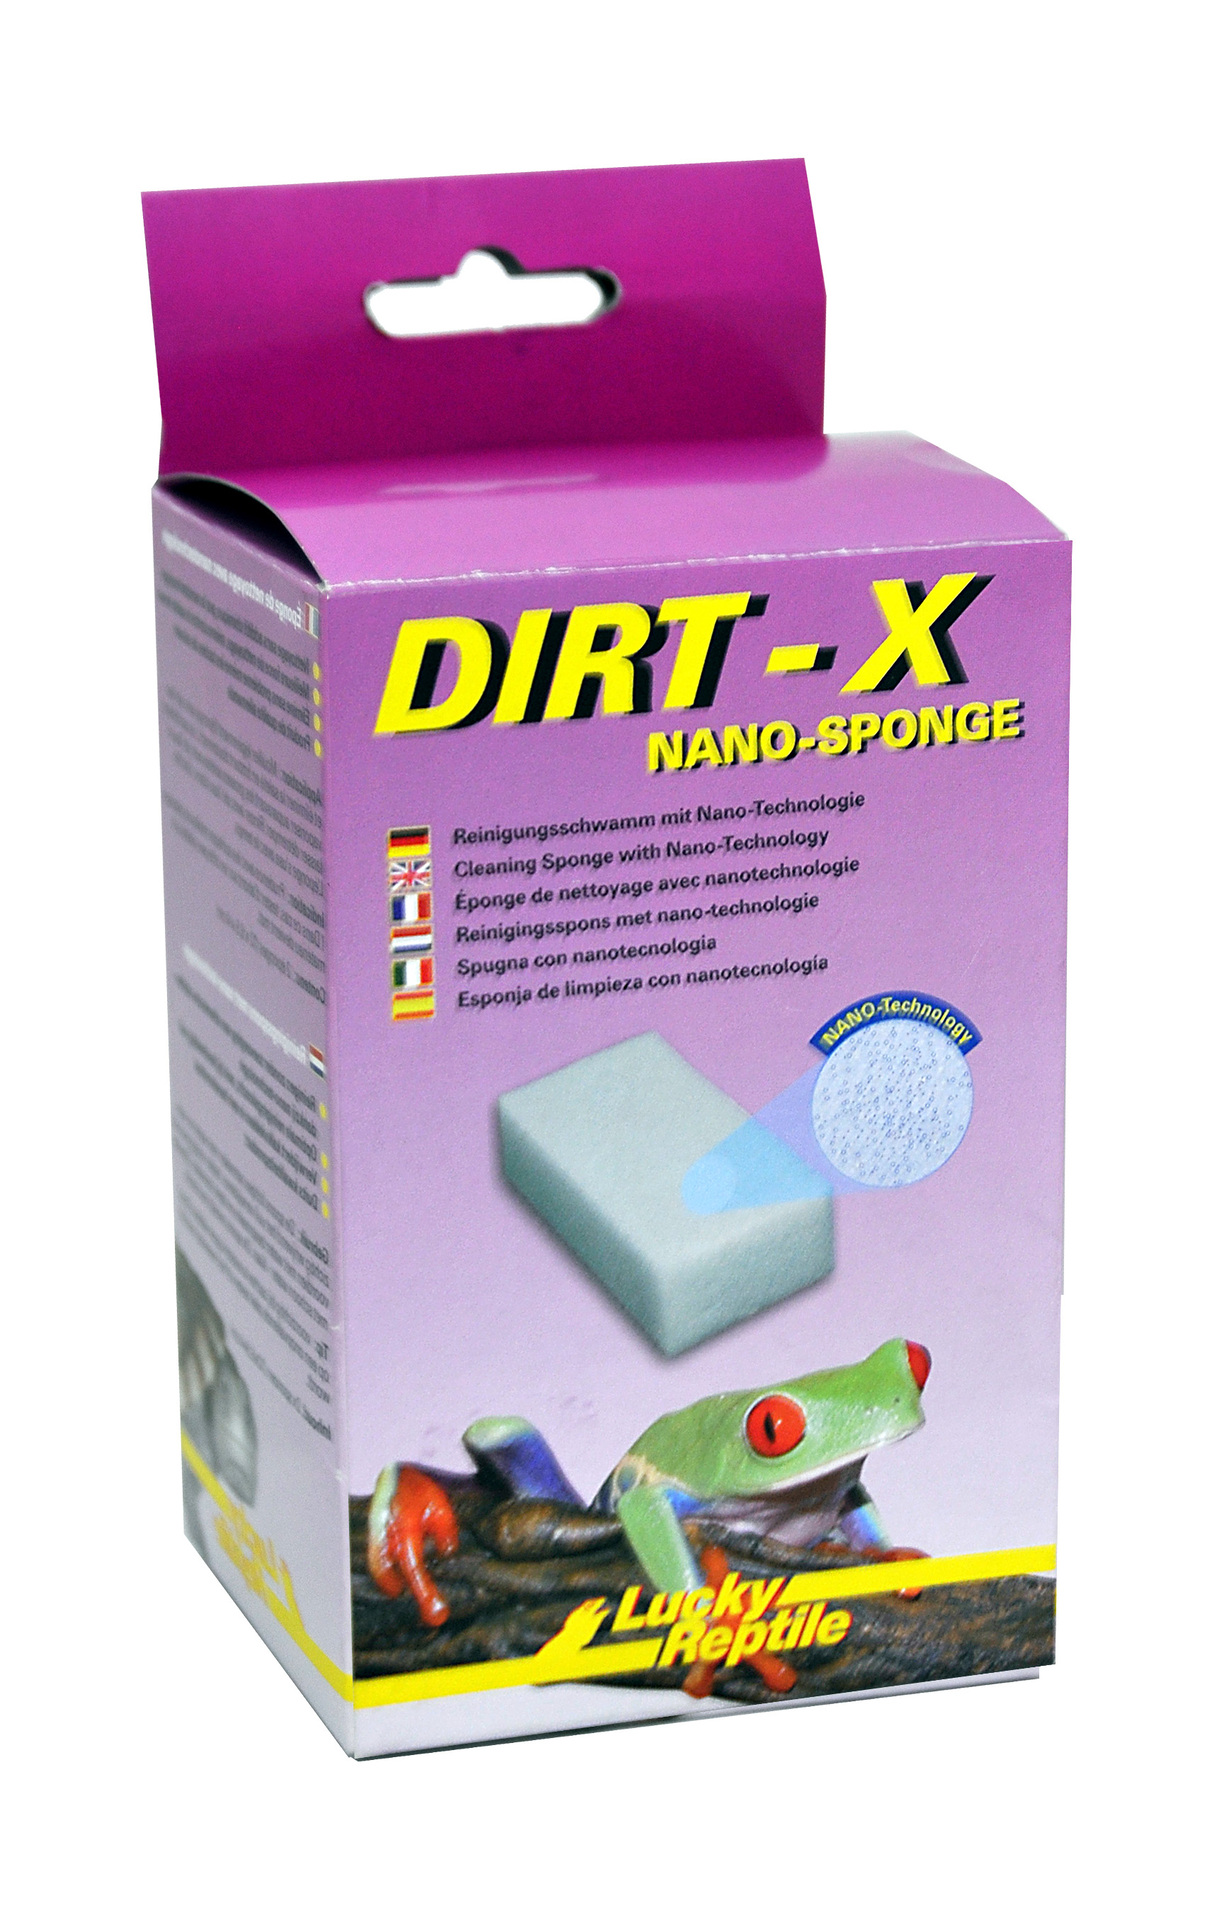 Dirt-X Nanosponge